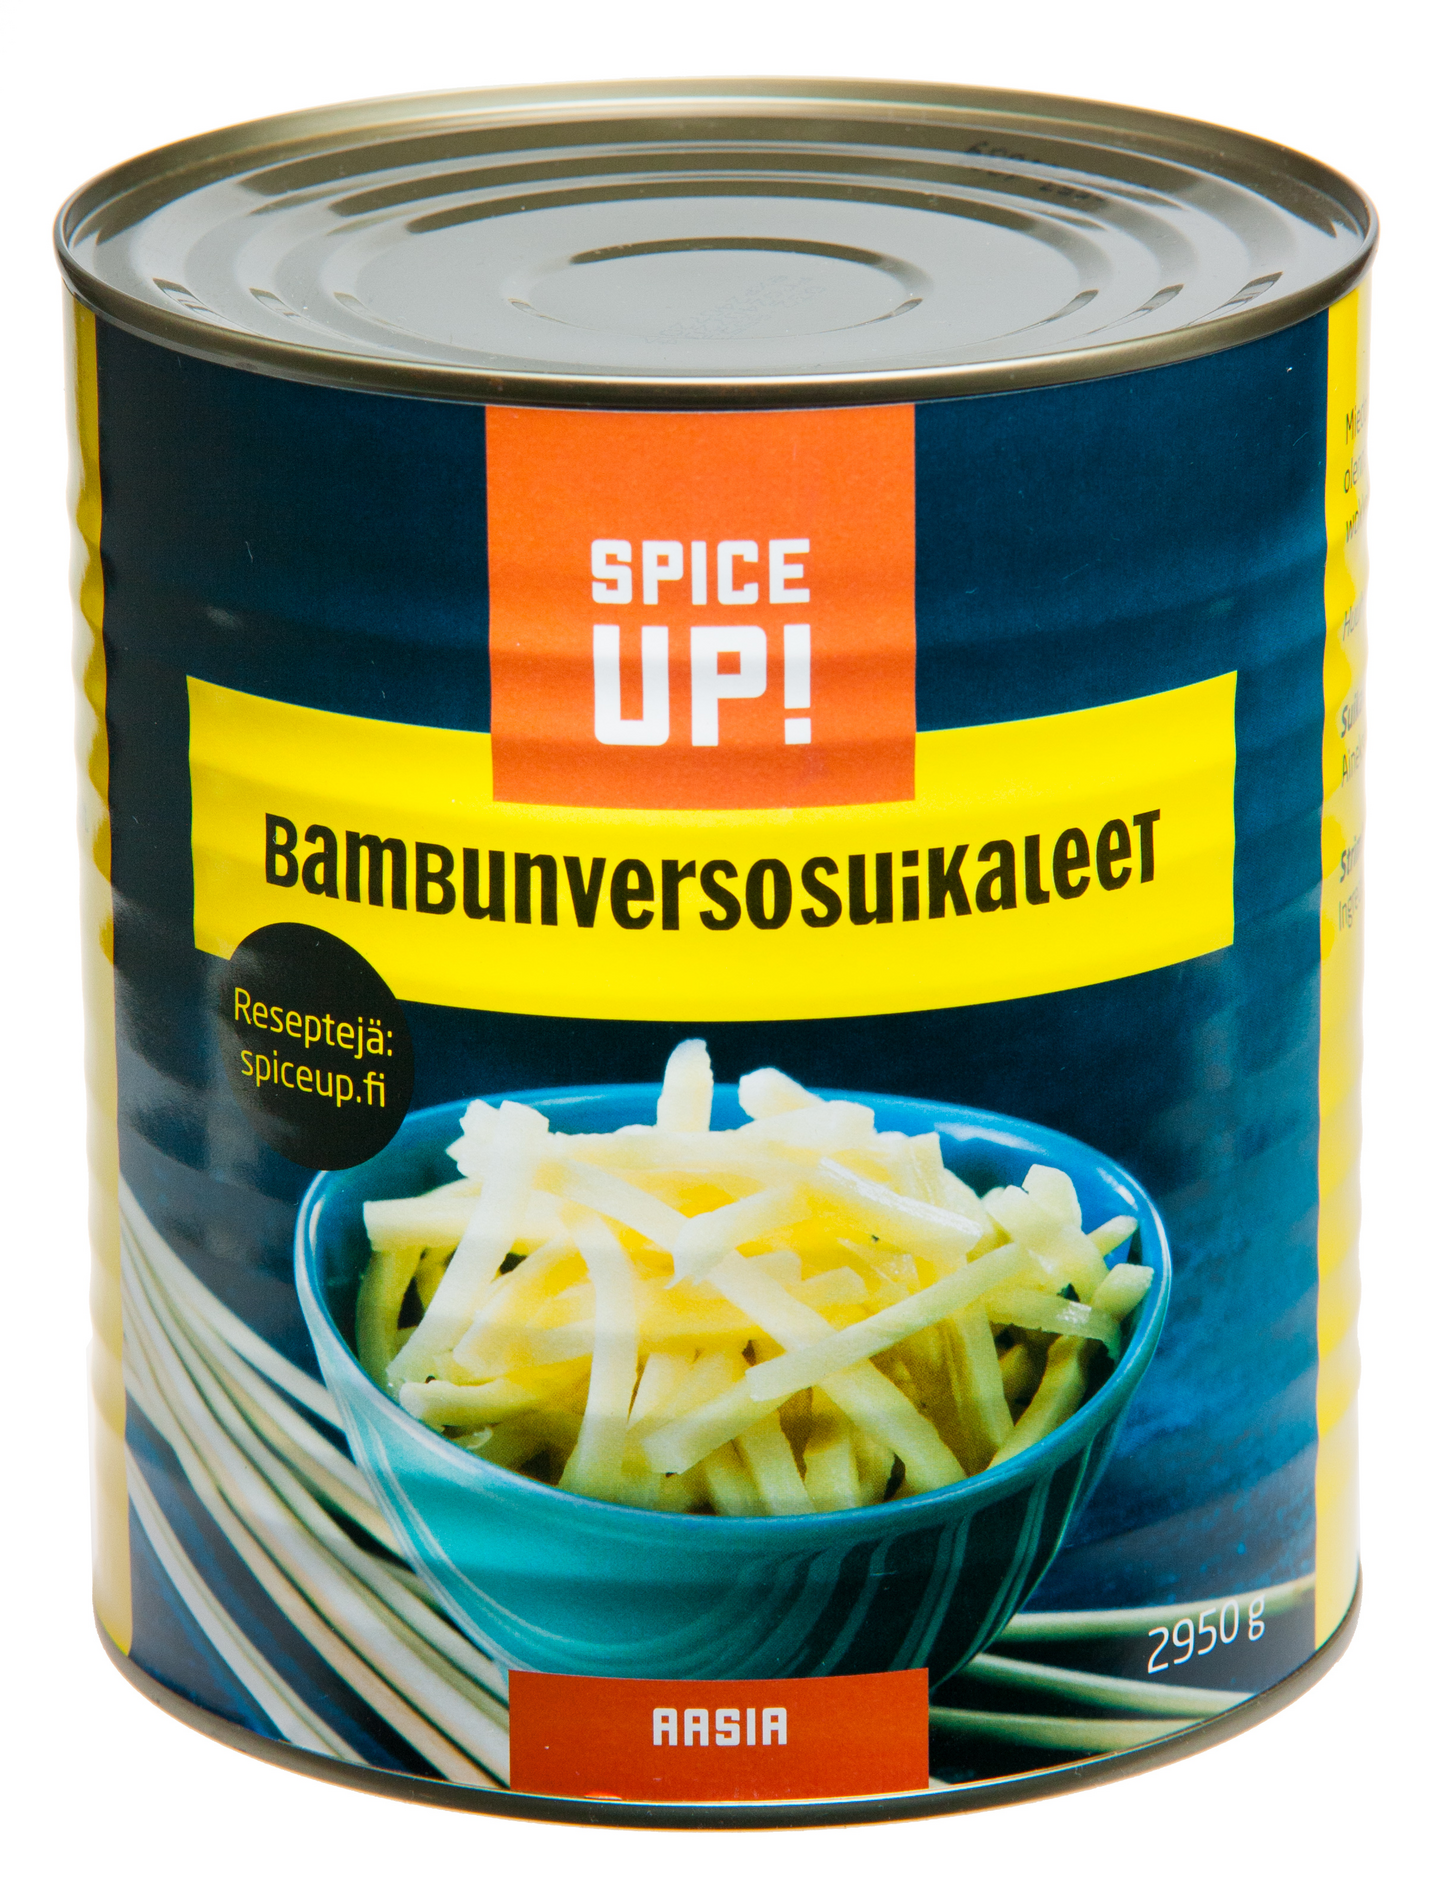 Spice Up! Bambunversosuikale 2950/1800g